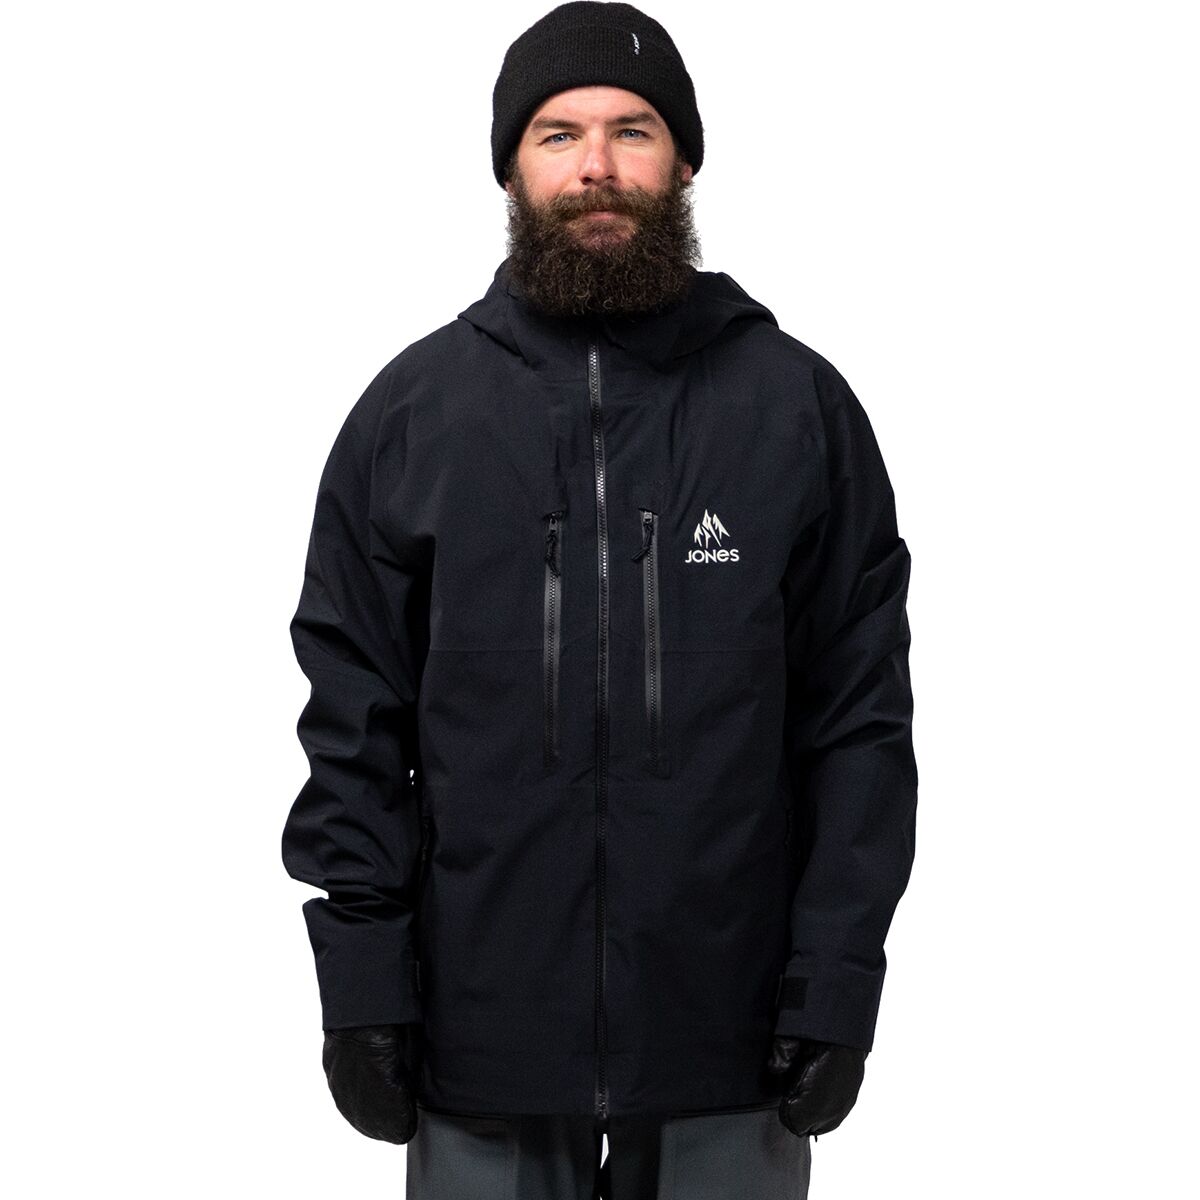 Jones Snowboards Shralpinist Stretch Recycled Jacket - Men's Stealth Black